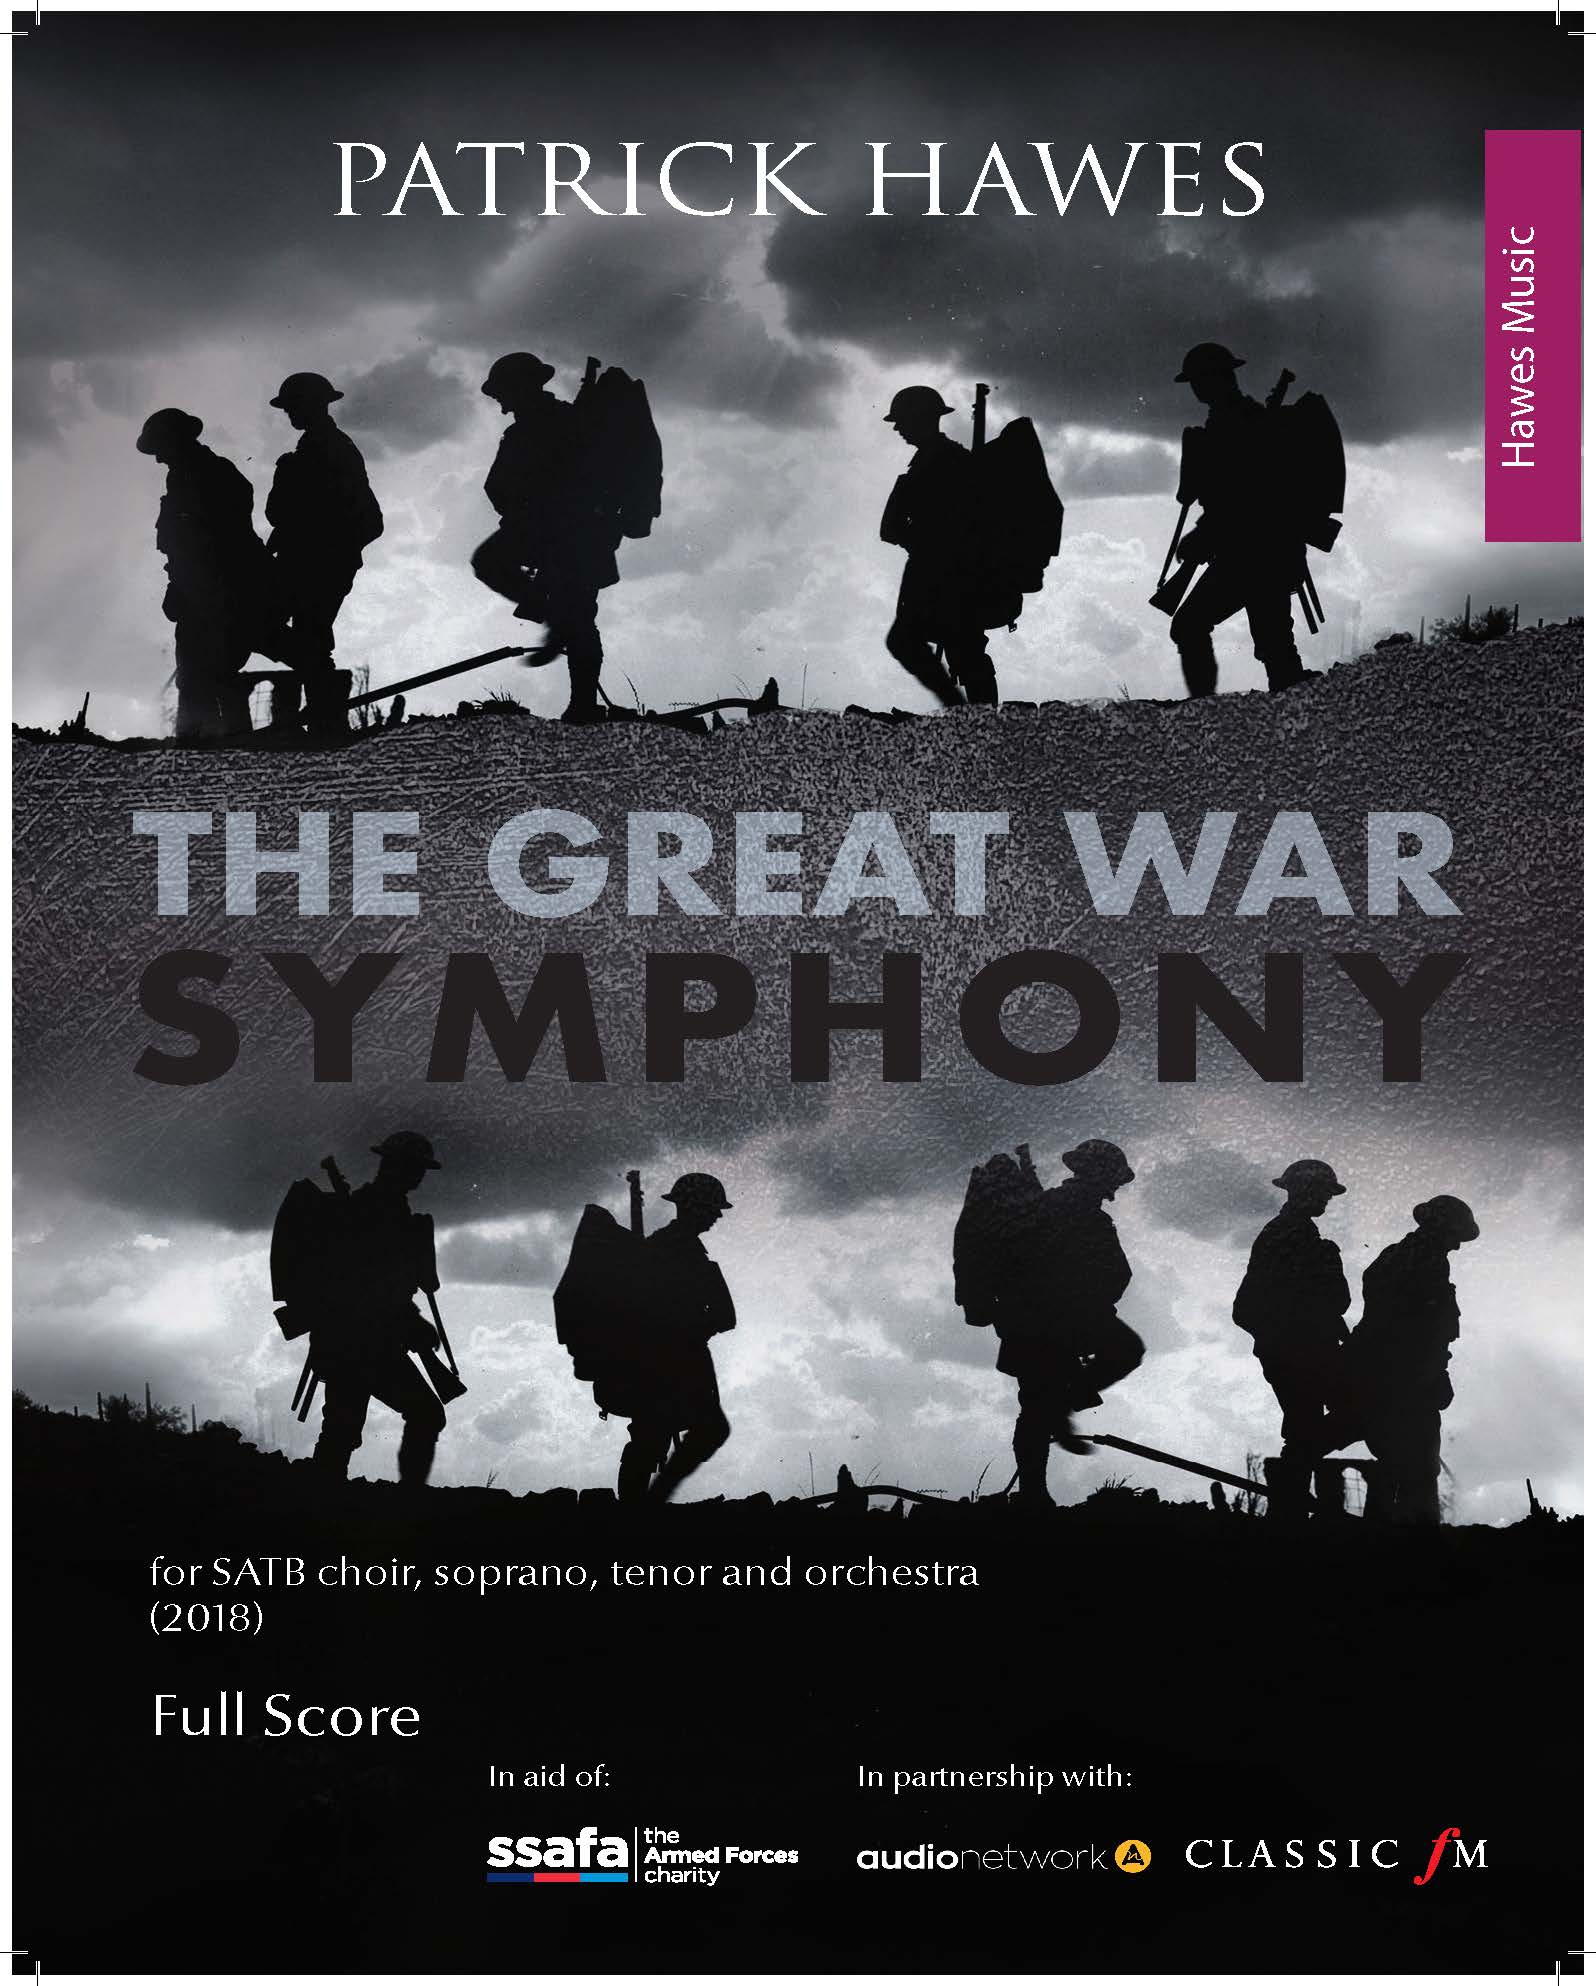 Symphony of War free downloads